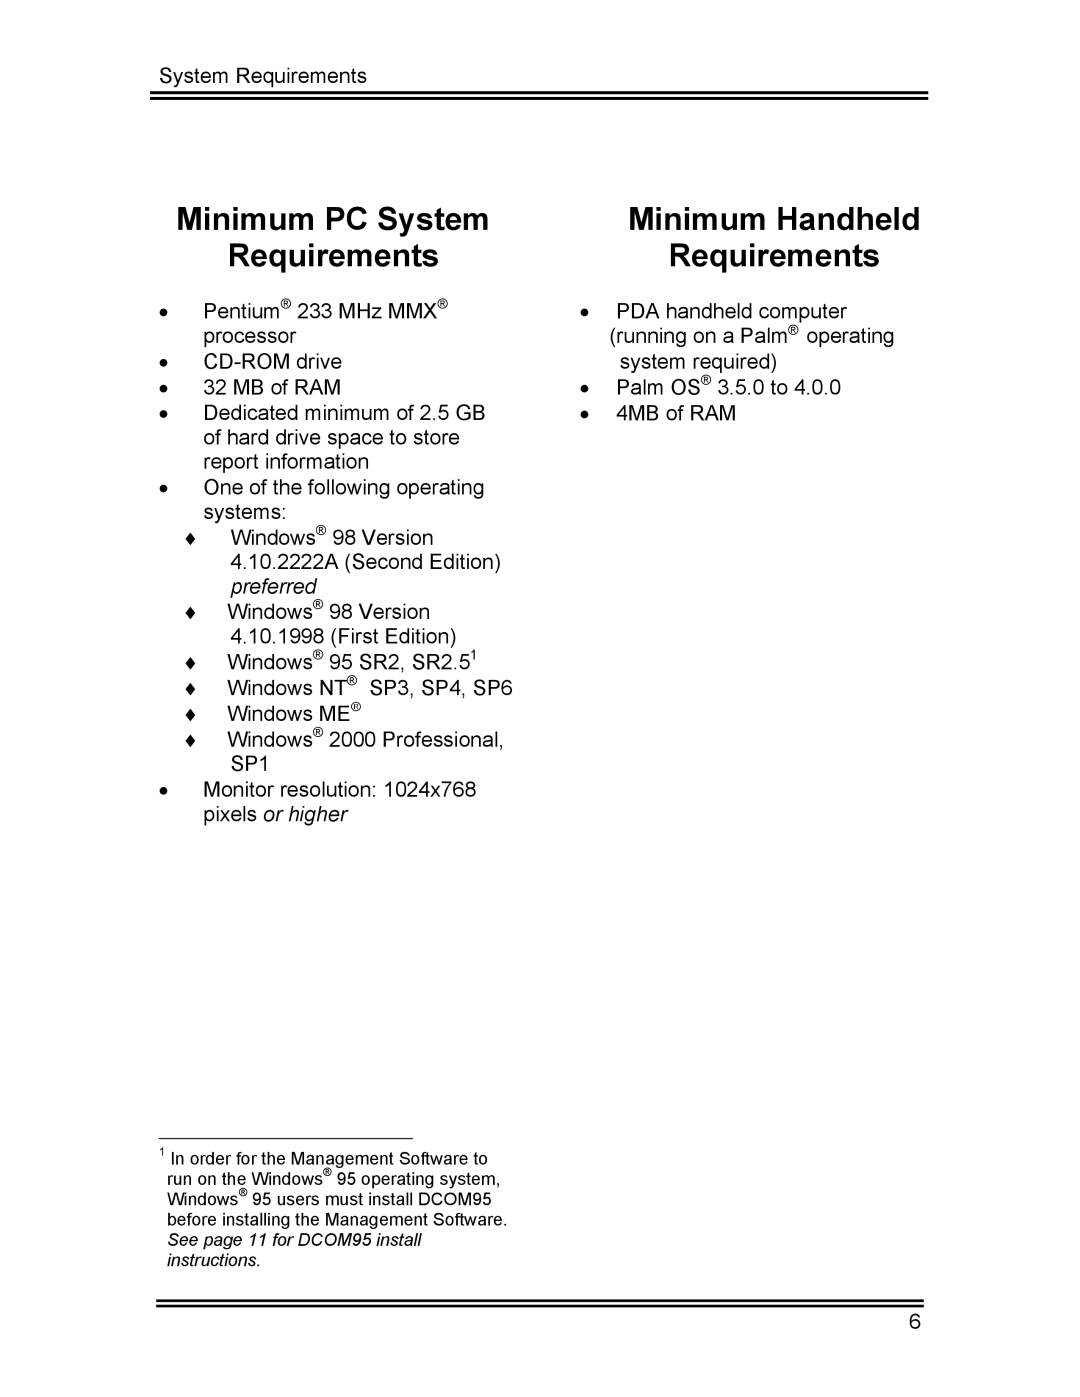 Whirlpool CL-8 user manual Minimum PC System Requirements, Minimum Handheld Requirements 